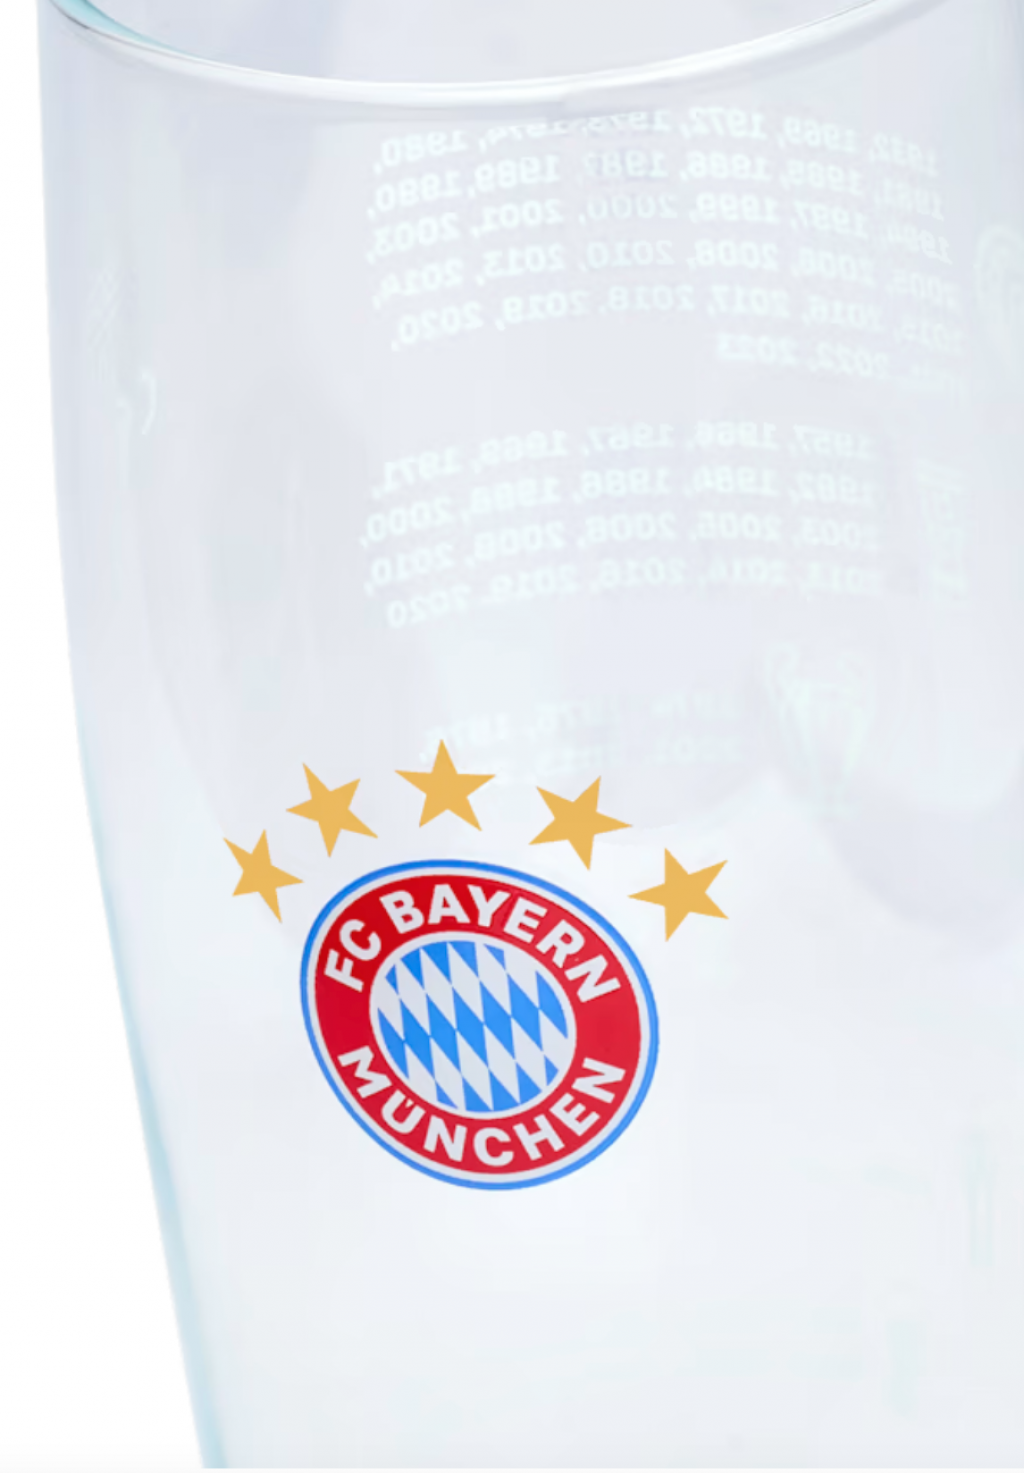 Skleničky na pivo 0,5l, FC Bayern München - 2ks